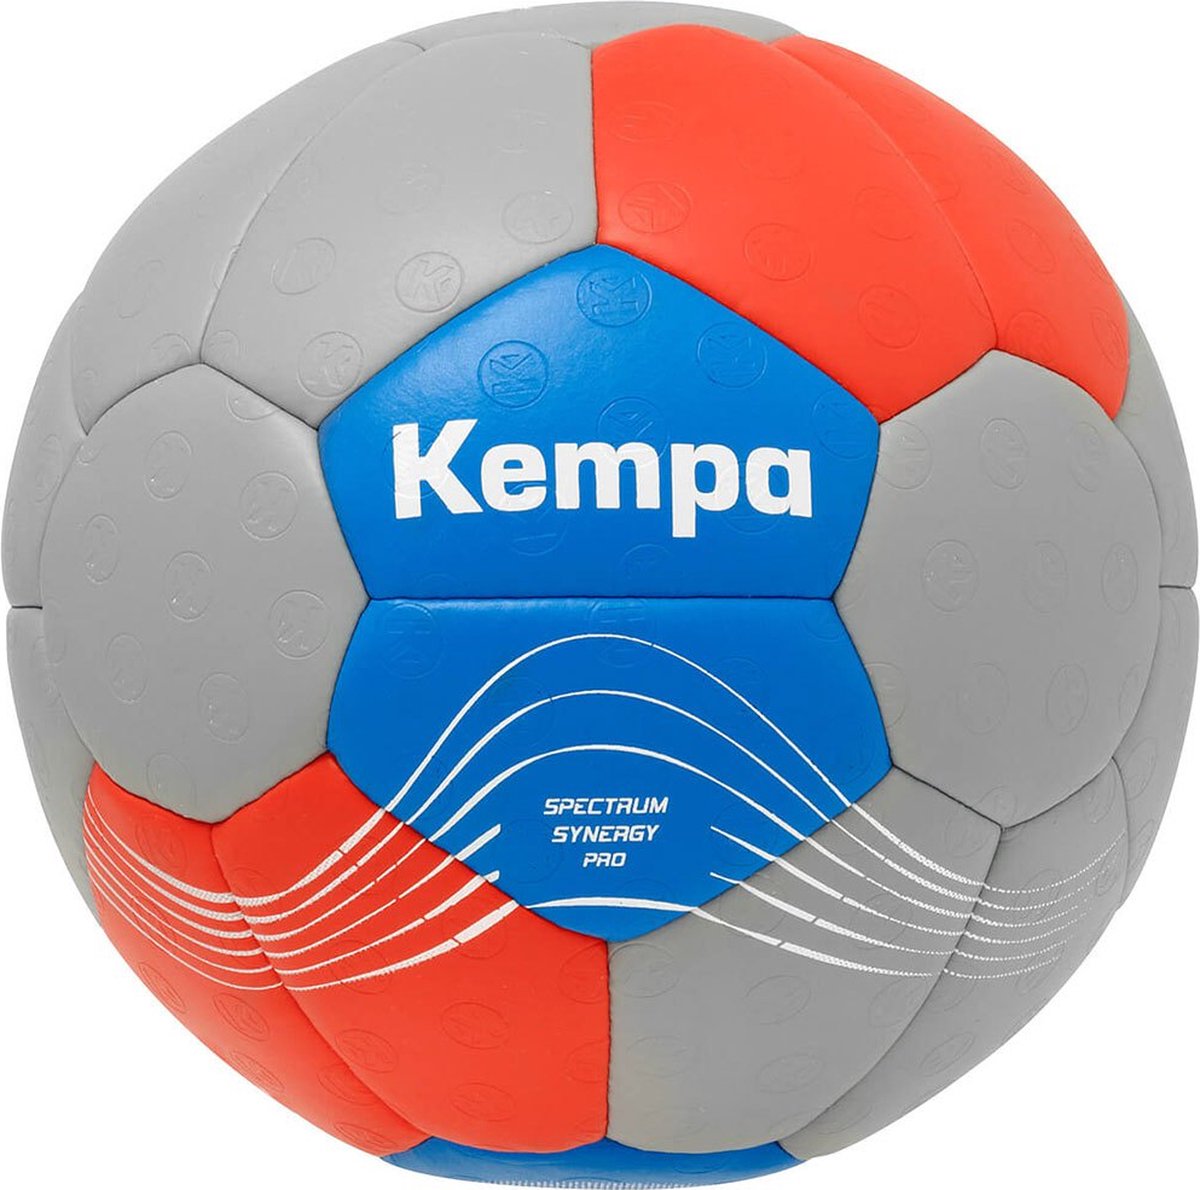 KEMPA Spectrum Synergy Pro Handbal Maat - 3